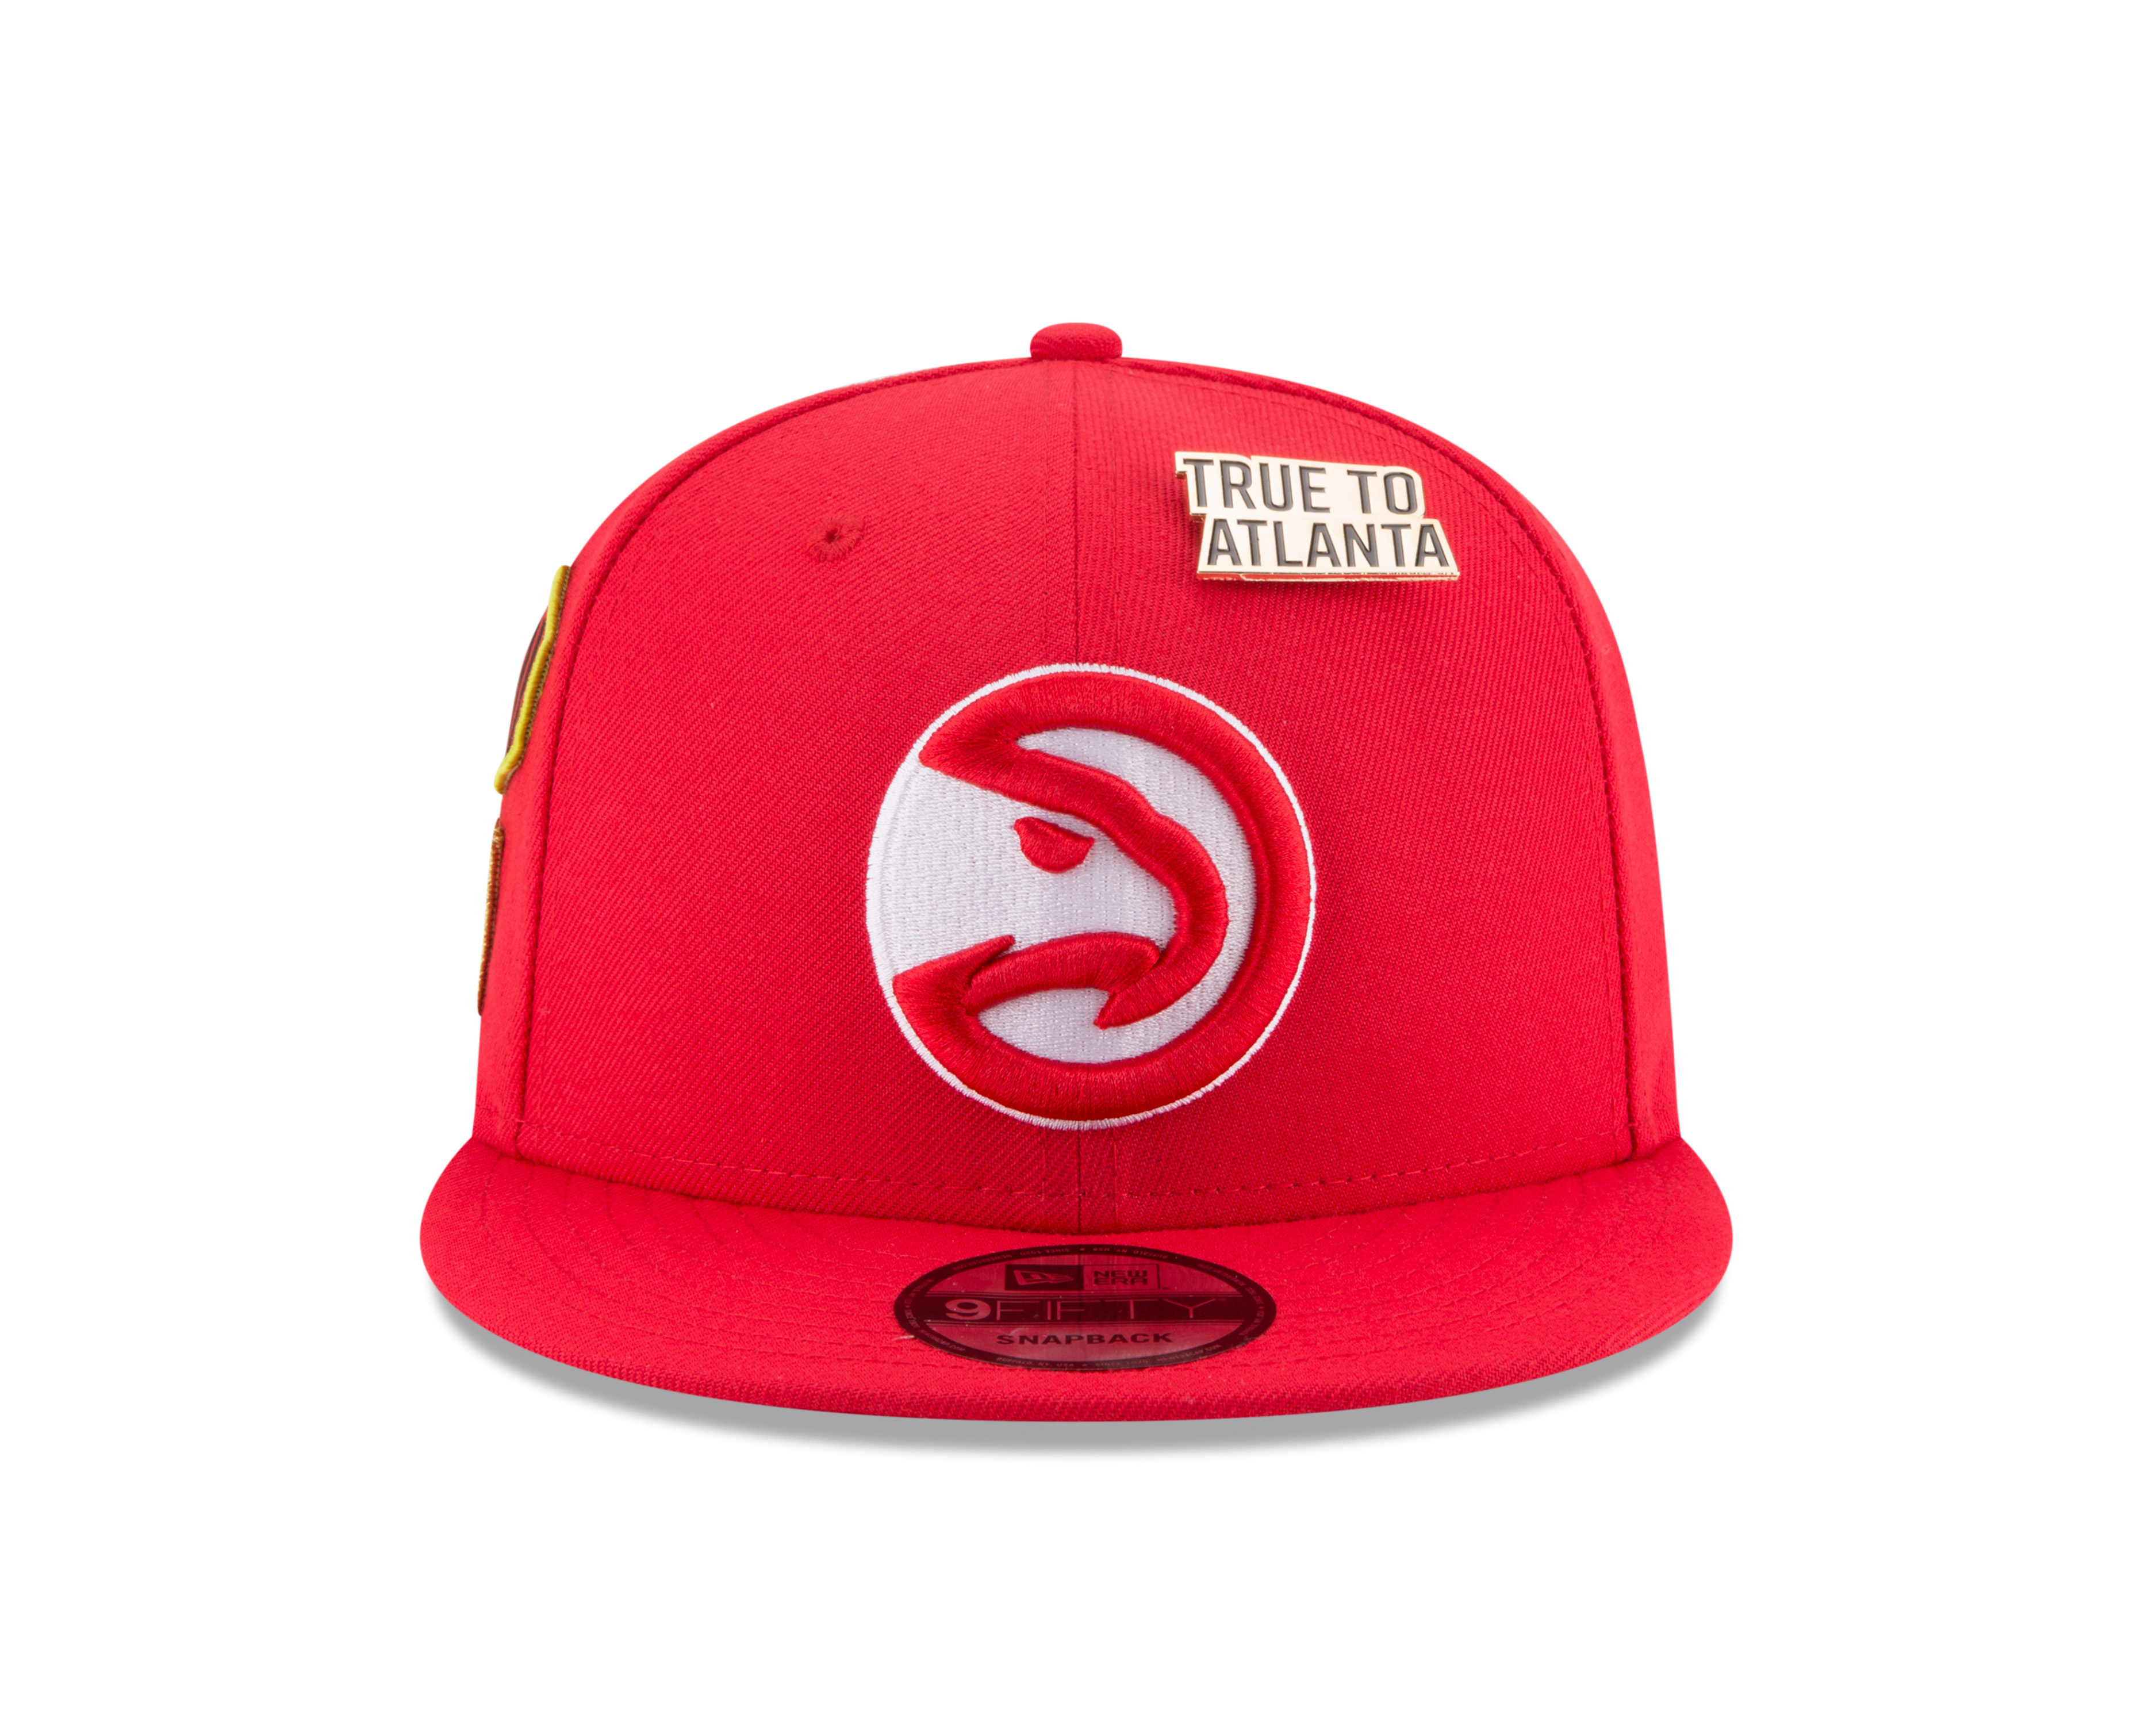 NBA draft 2021: Draft hats for all 30 teams from New Era